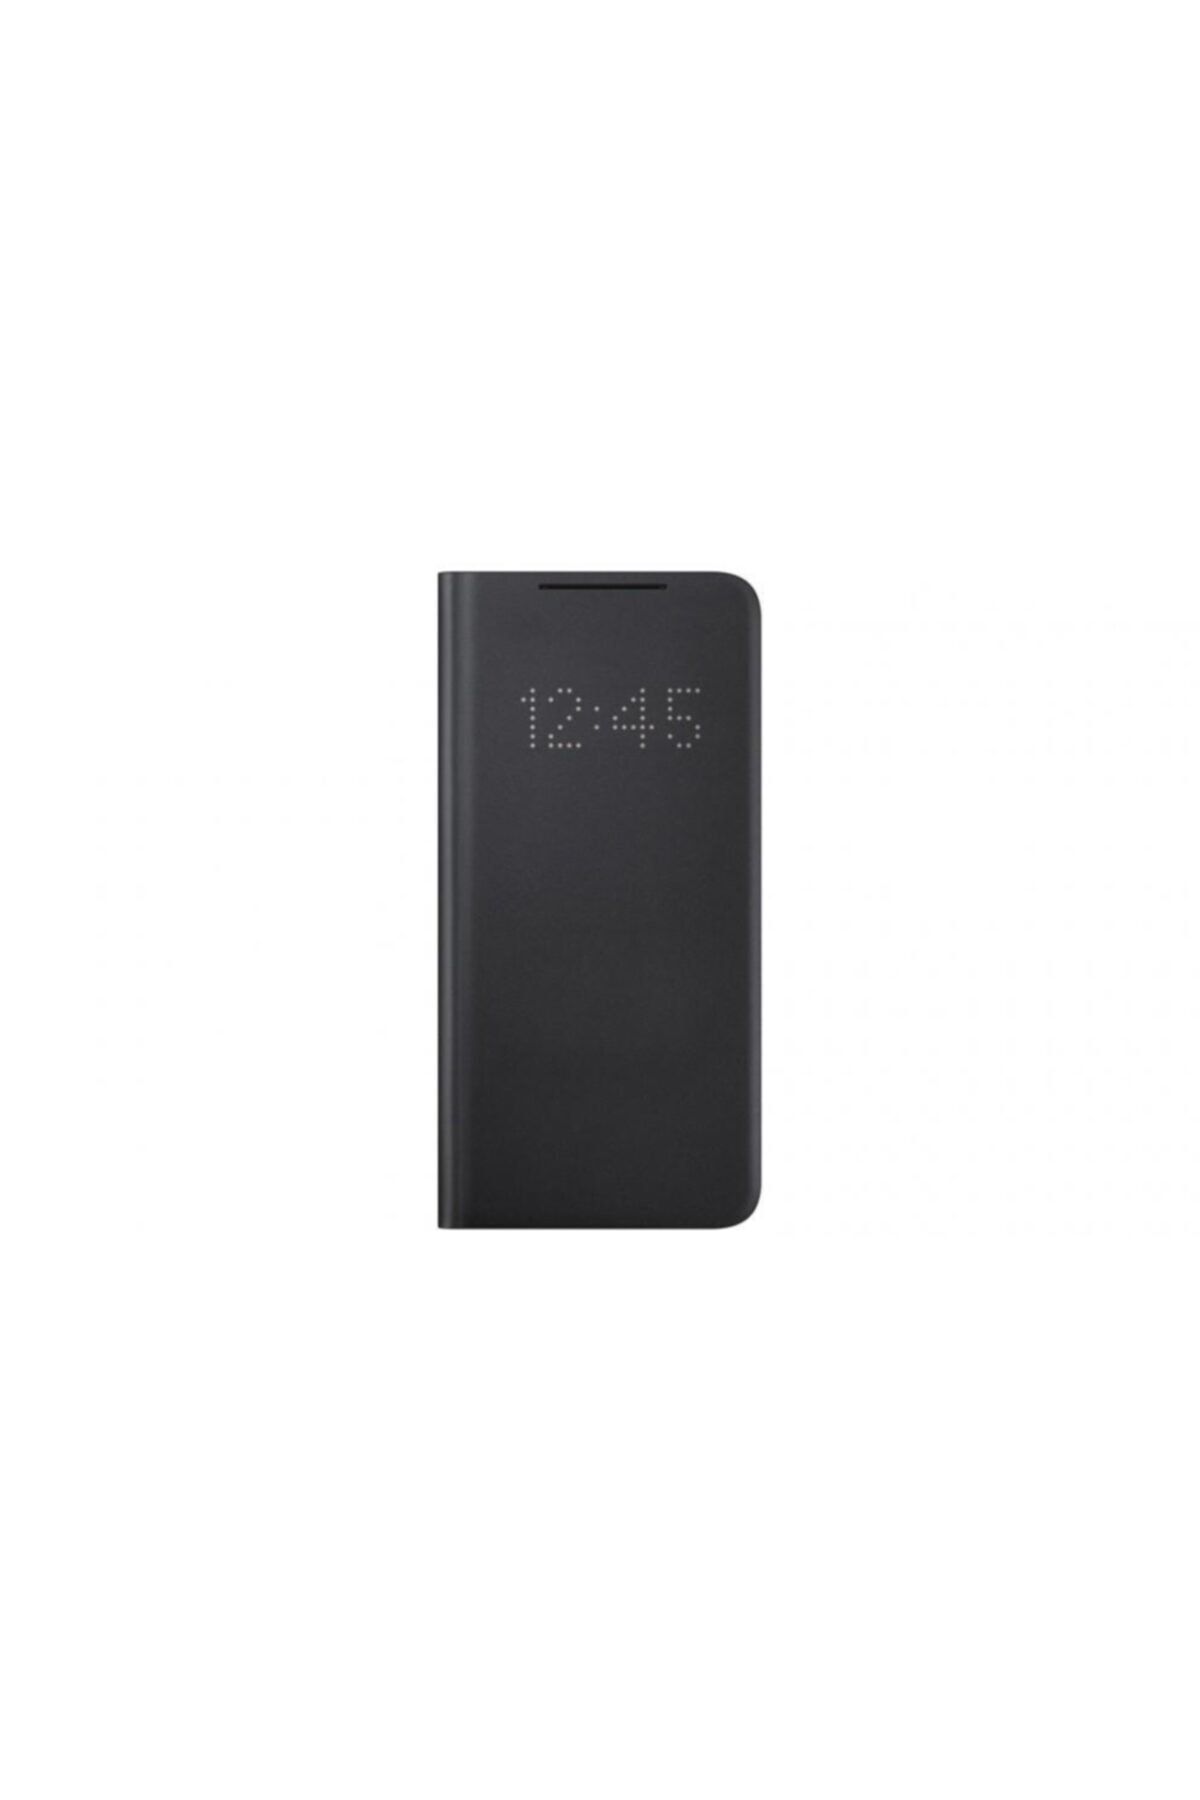 Samsung Galaxy S21 Akıllı Led View Kılıf - Siyah Ef-ng991pbegtr